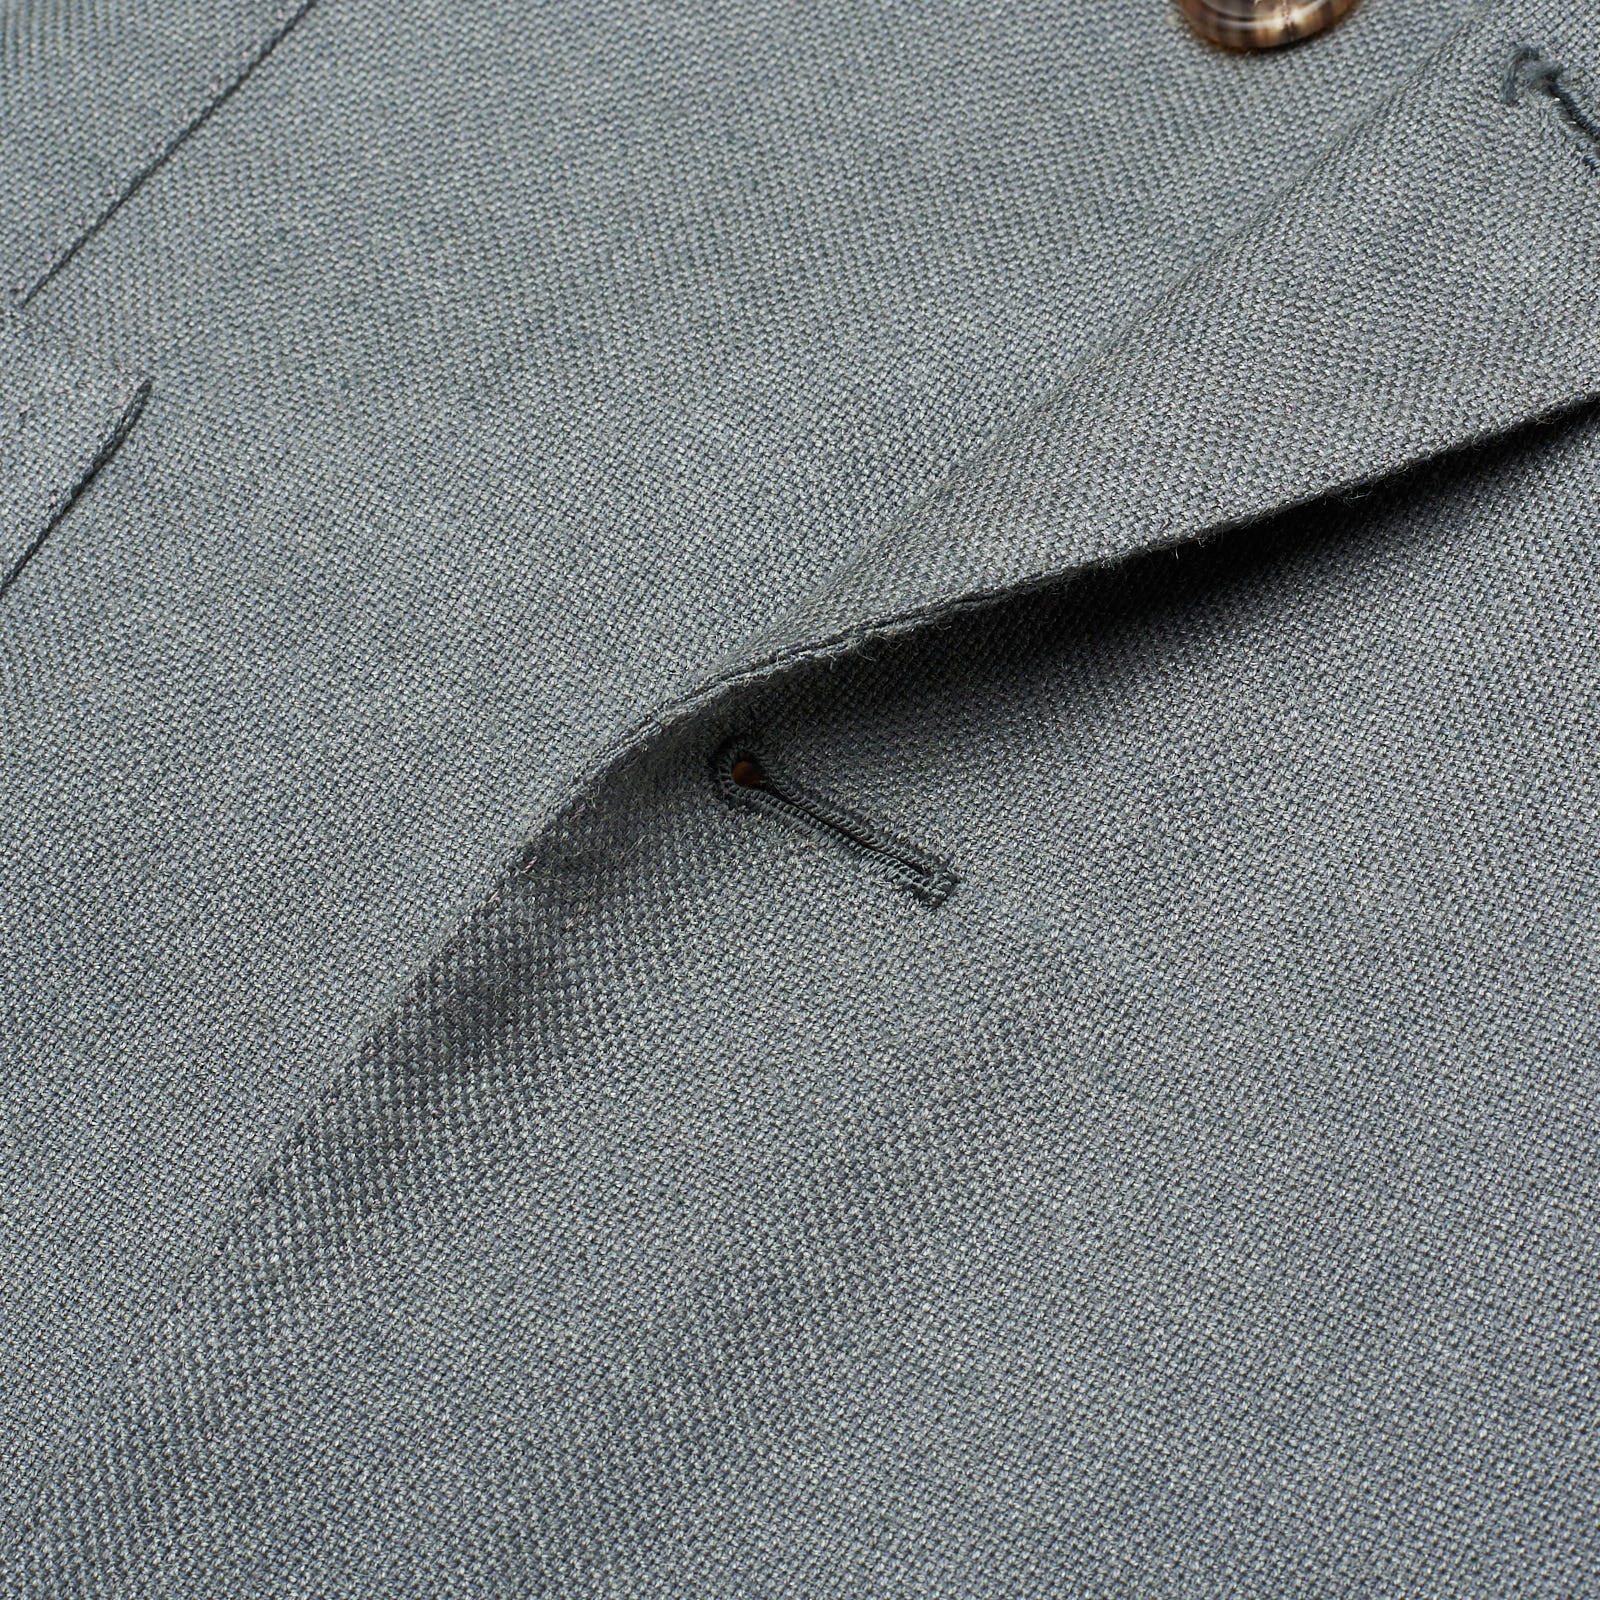 RUBINACCI LH Handmade Bespoke Gray Wool-Silk-Cashmere DB Jacket EU 50 NEW US 40 RUBINACCI